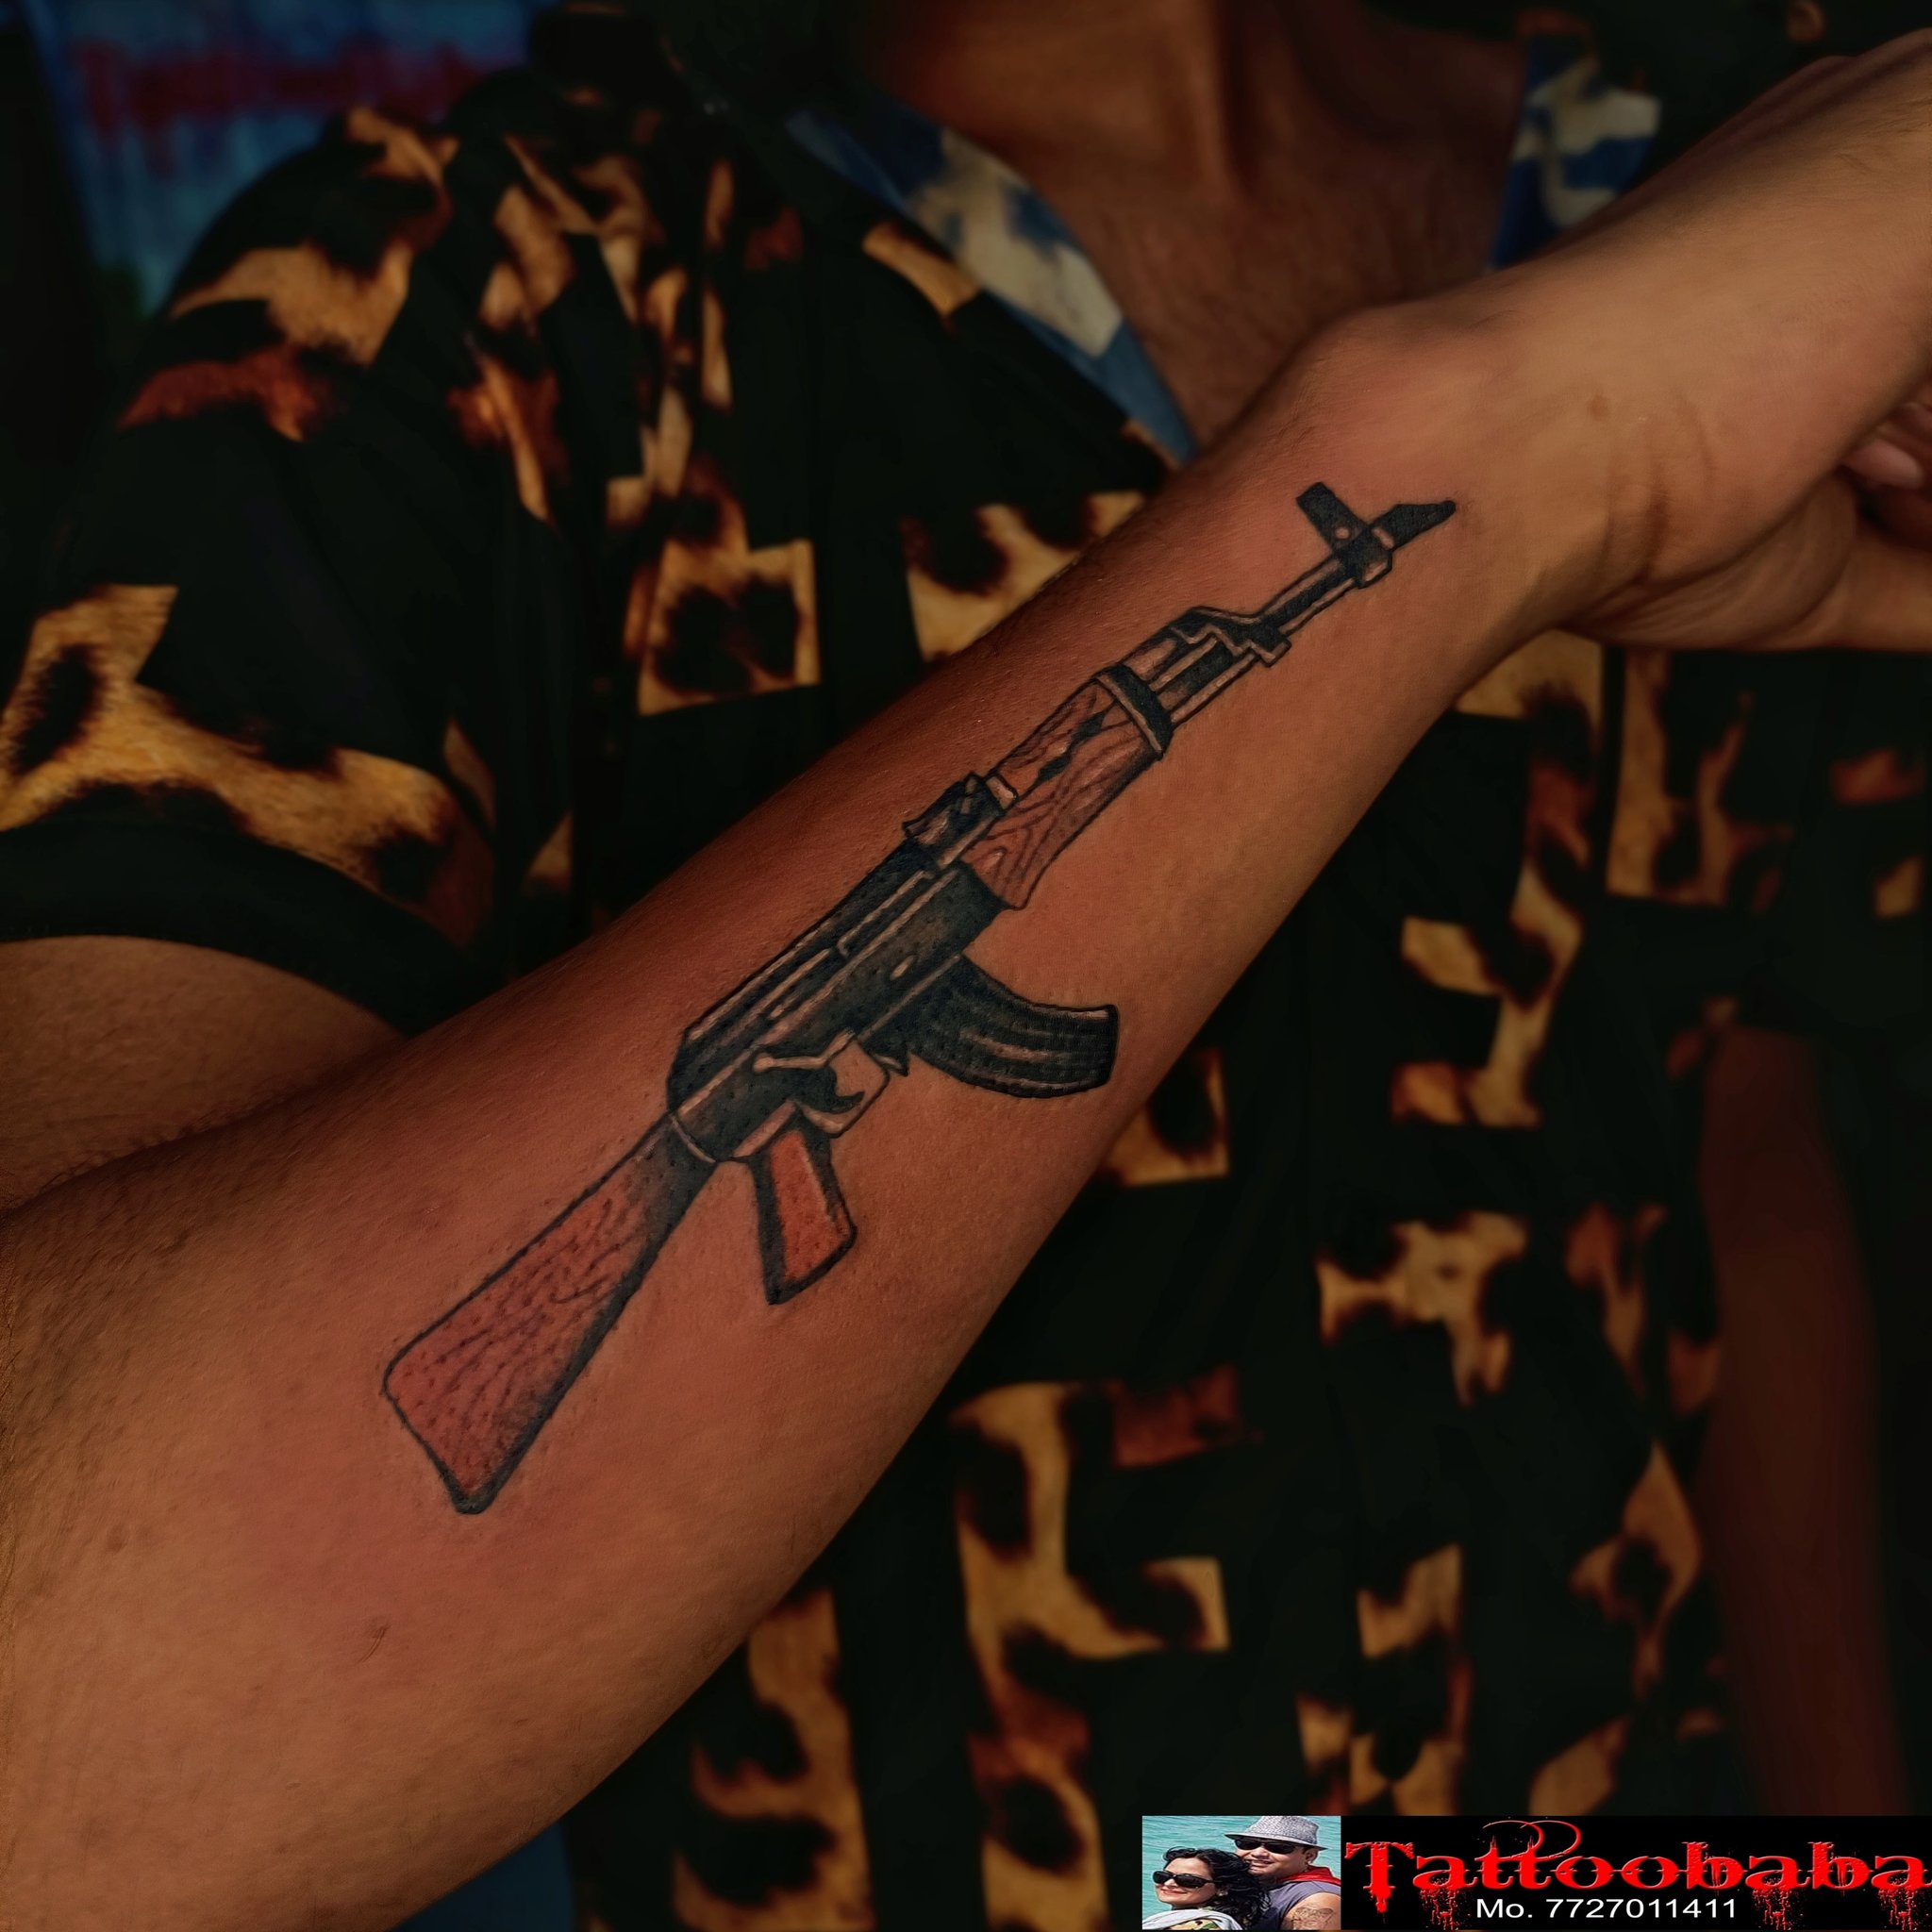 ak47 in Tattoos  Search in 13M Tattoos Now  Tattoodo